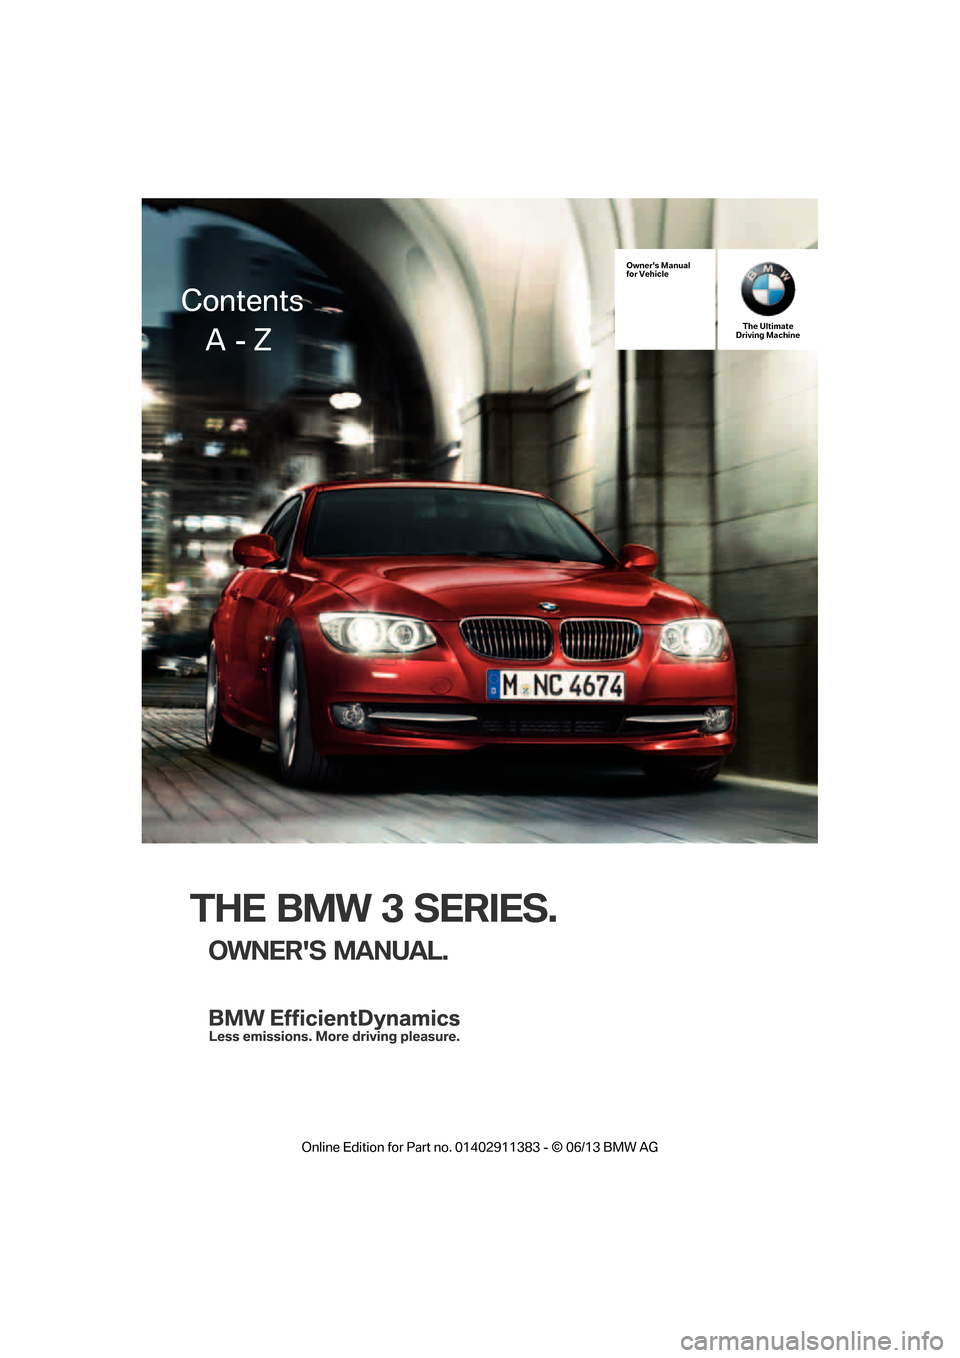 BMW 3 SERIES COUPE 2013 E92 Owners Manual THE BMW 3 SERIES.
OWNERS MANUAL.
Owners Manual
for VehicleThe Ultimate
Driving Machine
Contents
     A  - Z

�2�Q�O�L�Q�H �(�G�L�W�L�R�Q �I�R�U �3�D�U�W �Q�R� ����������� � �